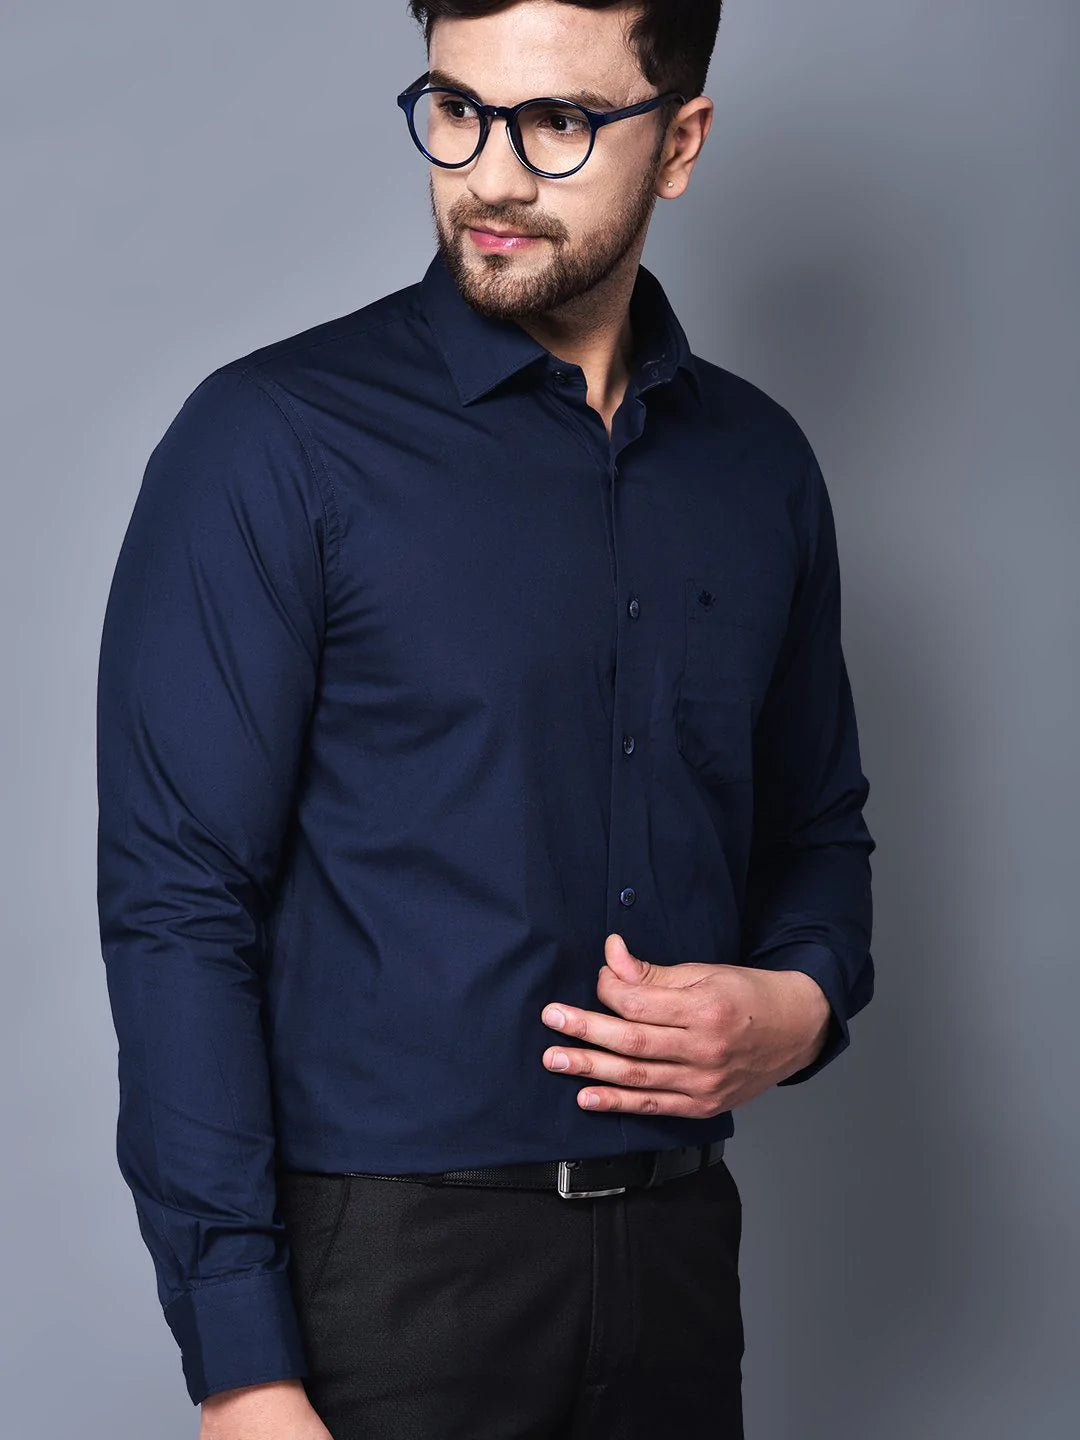 Men's Shirts - Menswear | Dunnes Stores